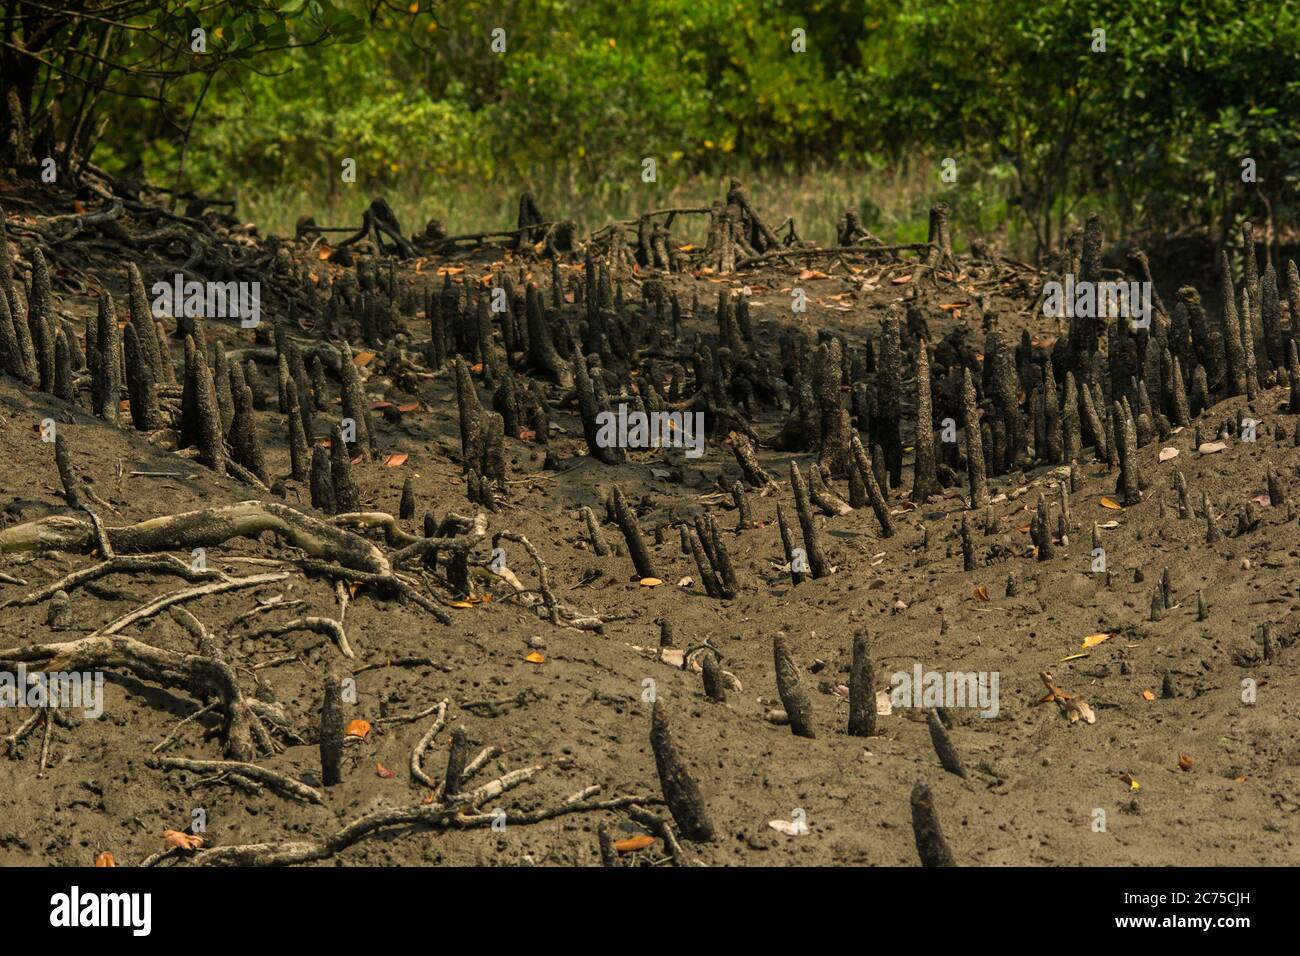 Sundari tree hi-res stock photography and images - Alamy